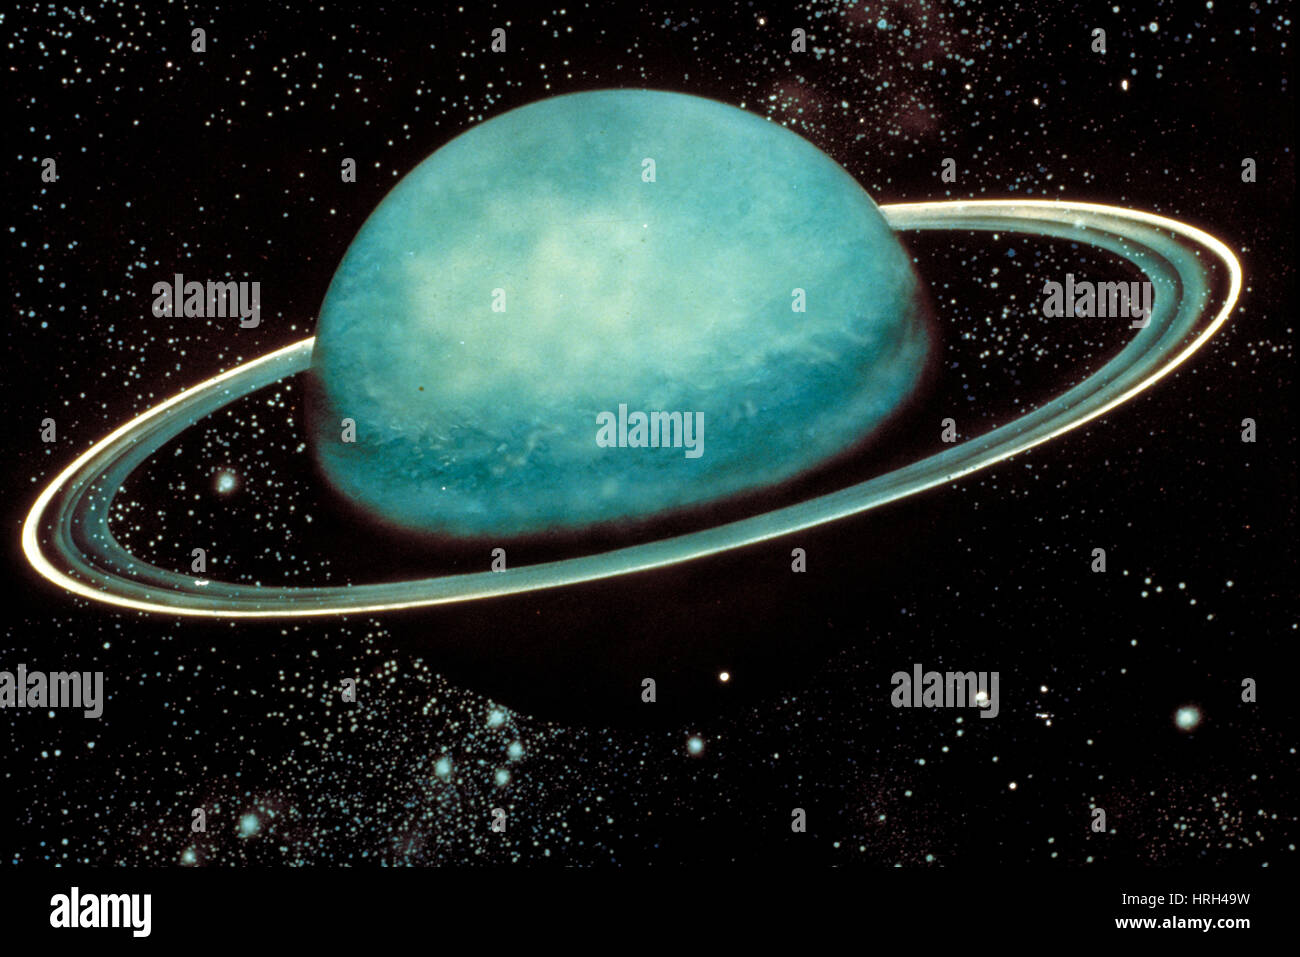 Stunning New Pics Reveal The Rings of Uranus Are Like Nothing Else in The  Solar System : ScienceAlert